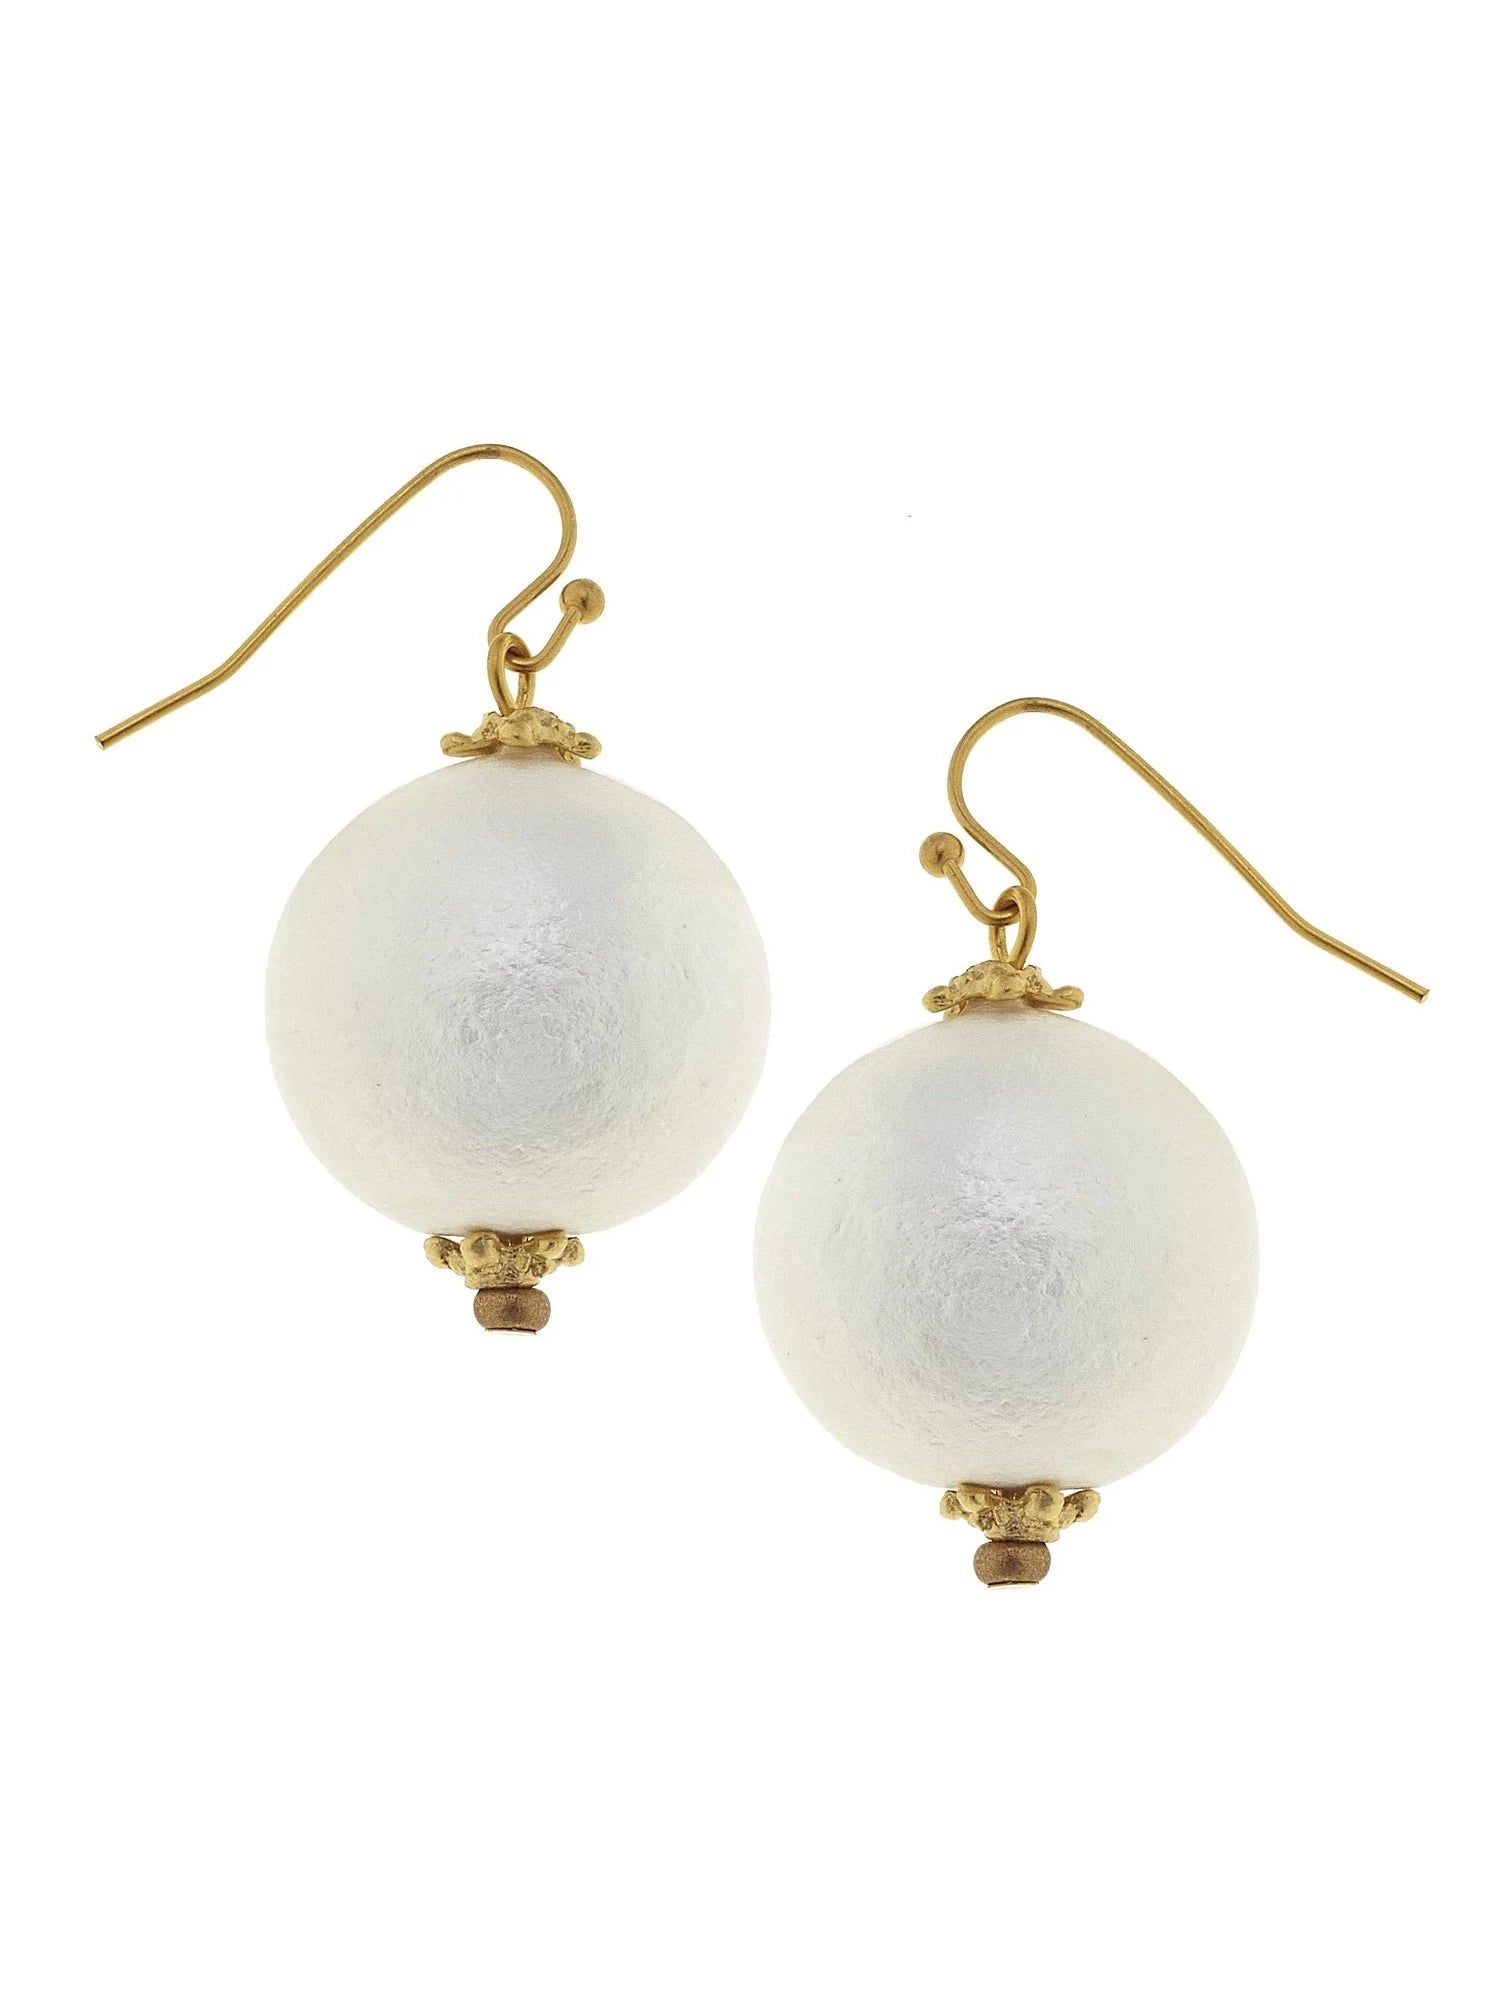 Cotton Pearl Drop Earrings by Susan Shaw